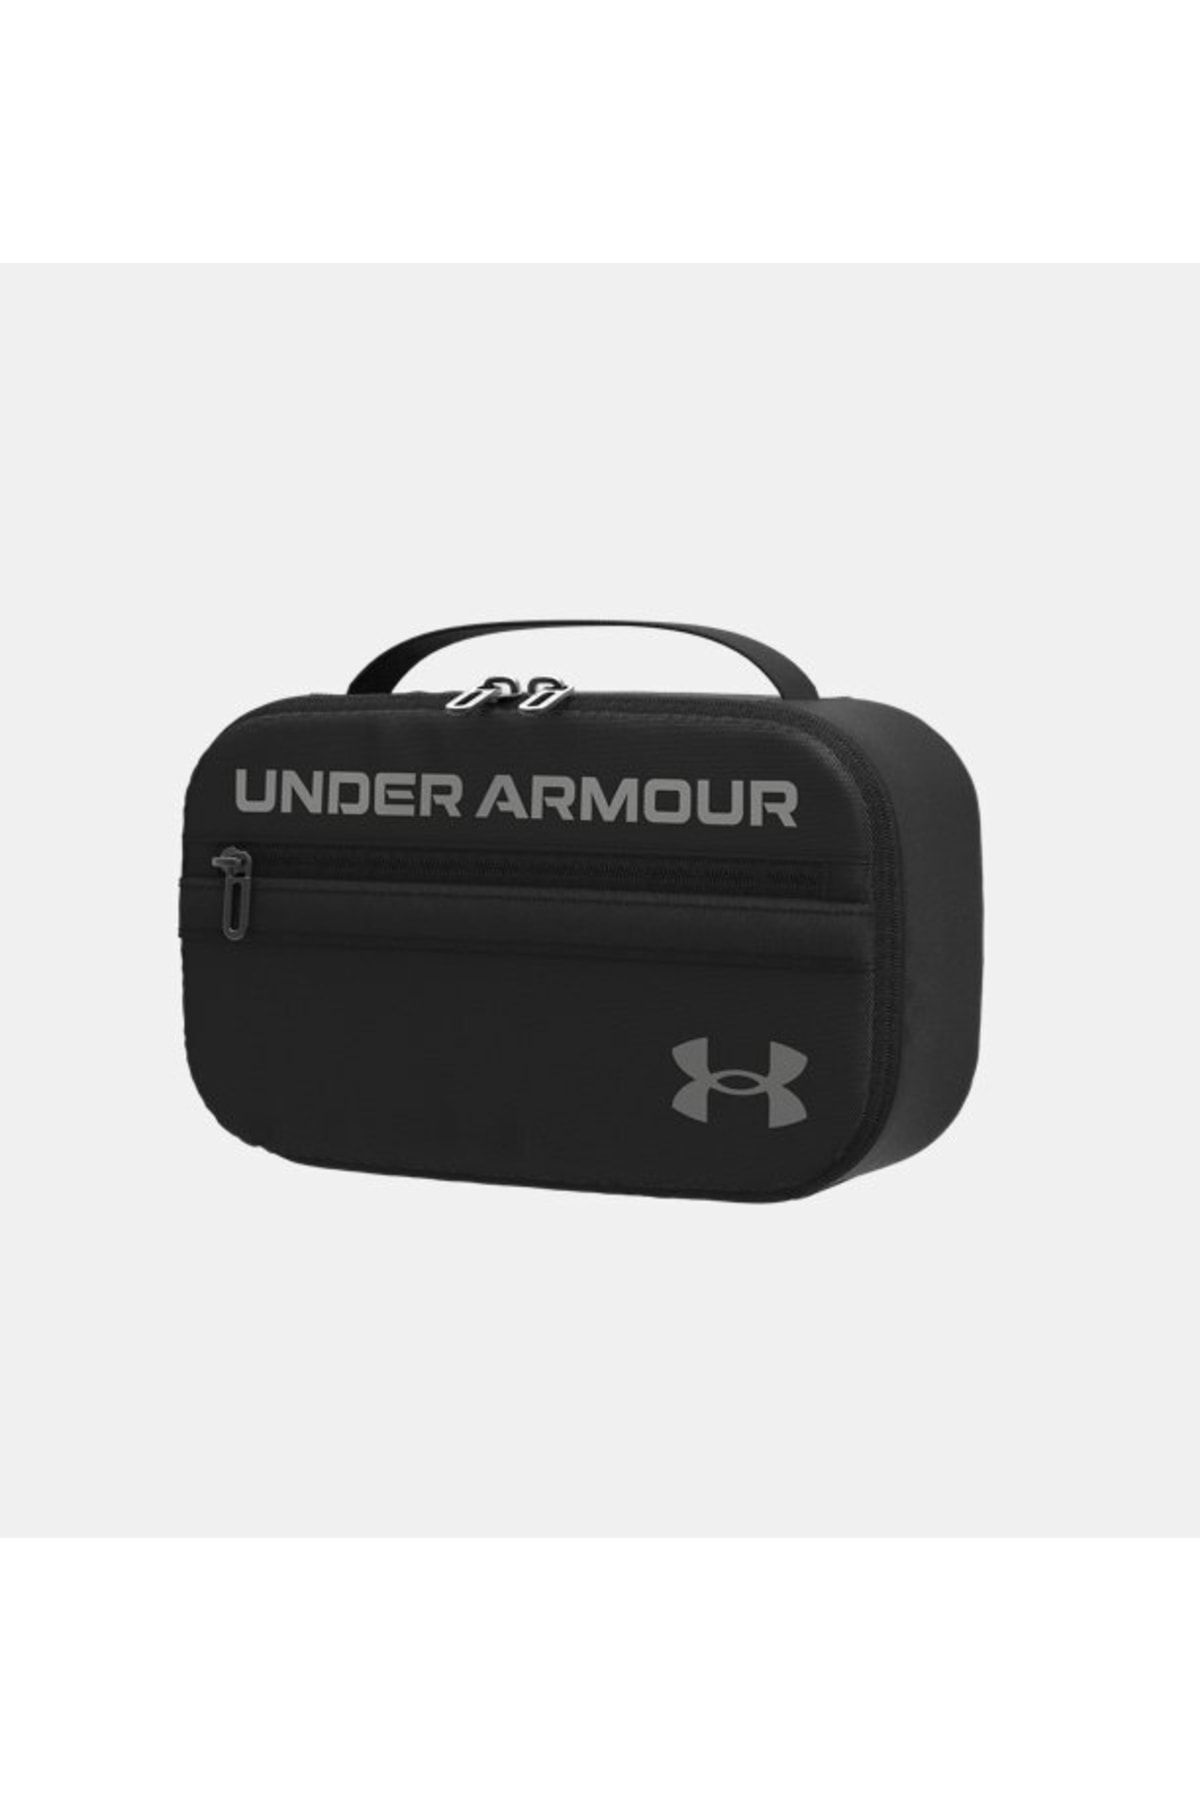 Under Armor Countain Travel Kit - Black - 1361993-001